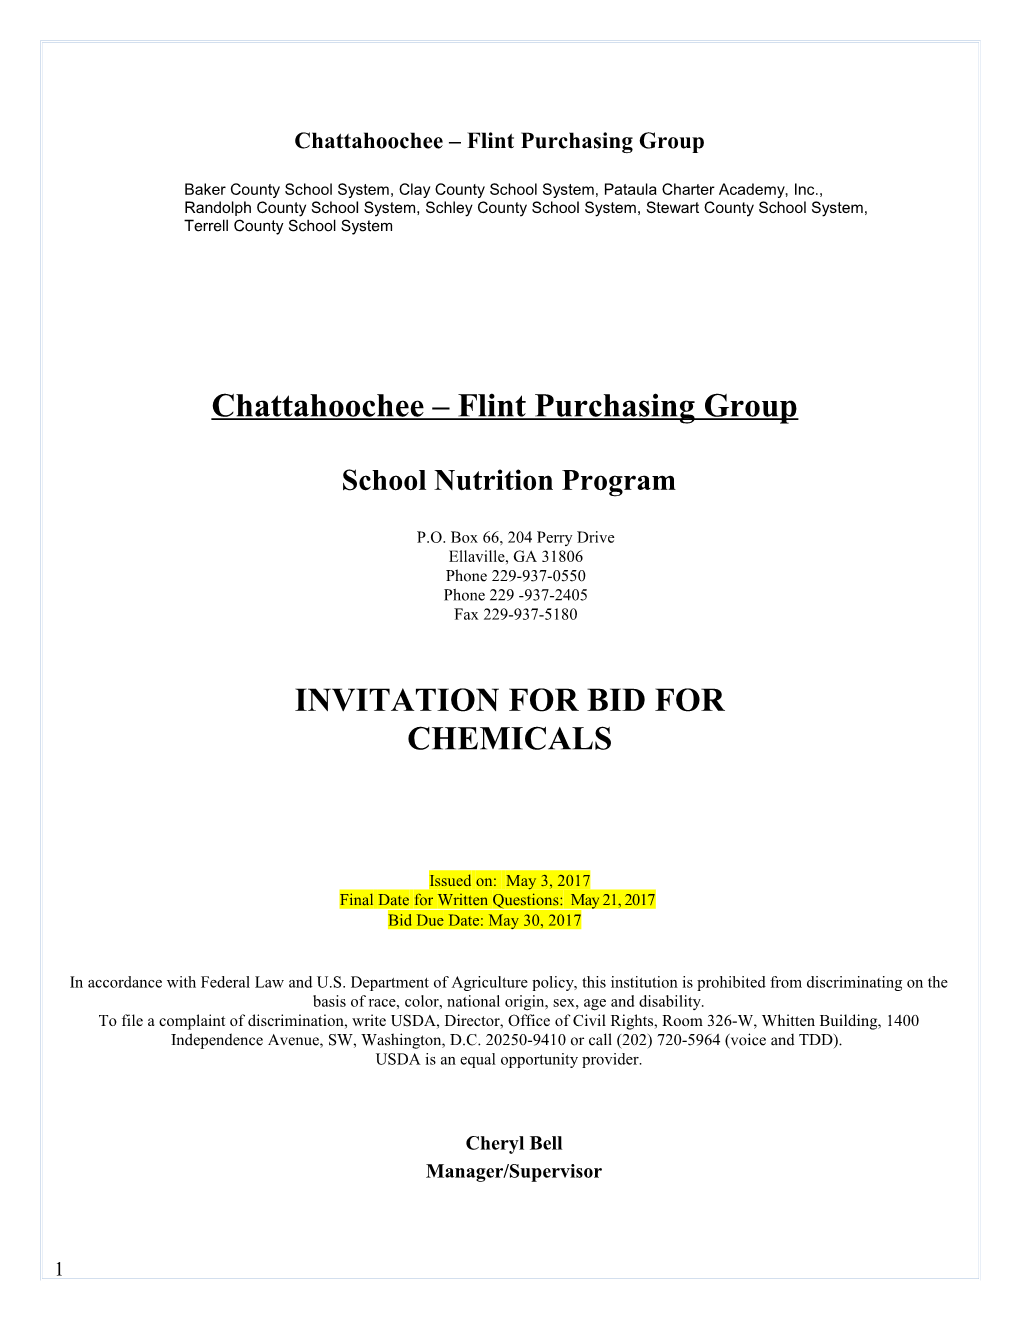 Chattahoochee Flint Purchasing Group